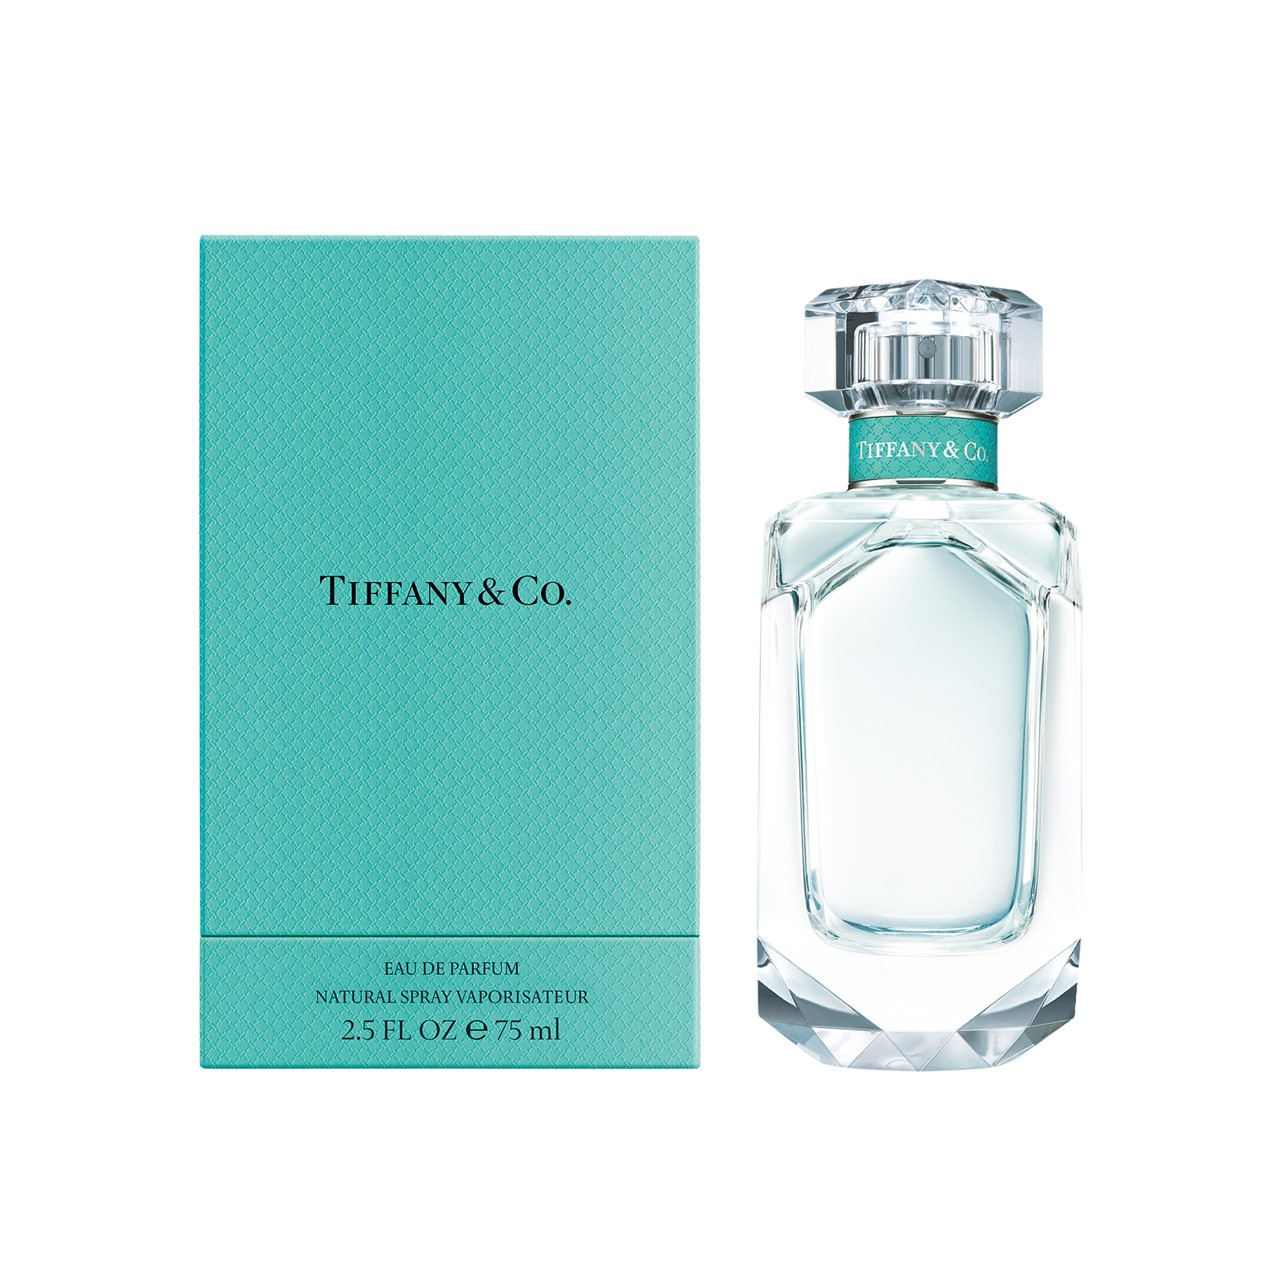 Tiffany & Co. Eau de Parfum 75ml (2.5fl oz)